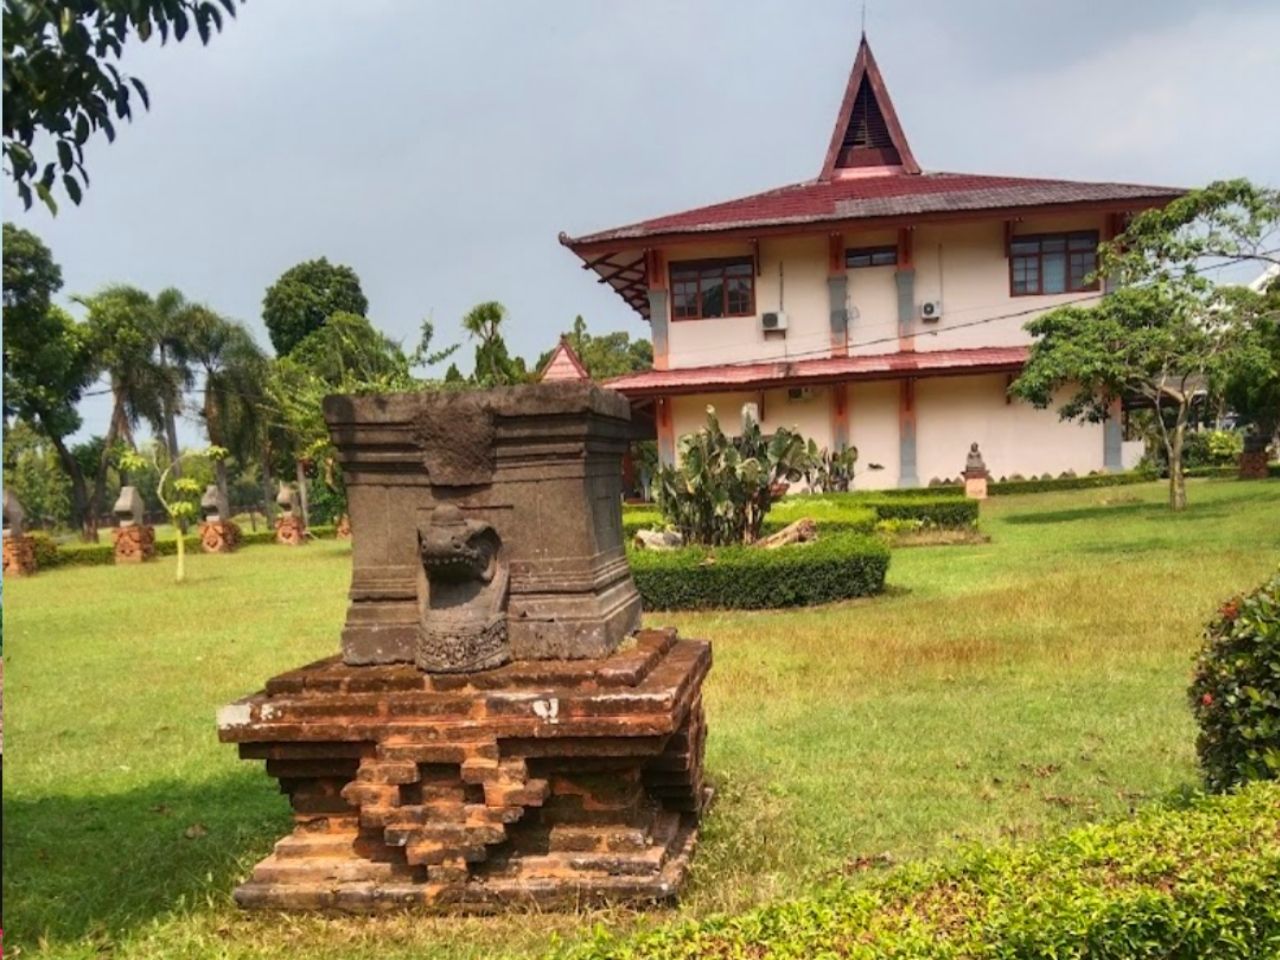 Museum Trowulan, sebuah museum arkeologi yang terletak di Trowulan, Mojokerto, Jawa Timur, menyajikan kekayaan budaya dan sejarah Indonesia, khususnya peninggalan Kerajaan Majapahit.